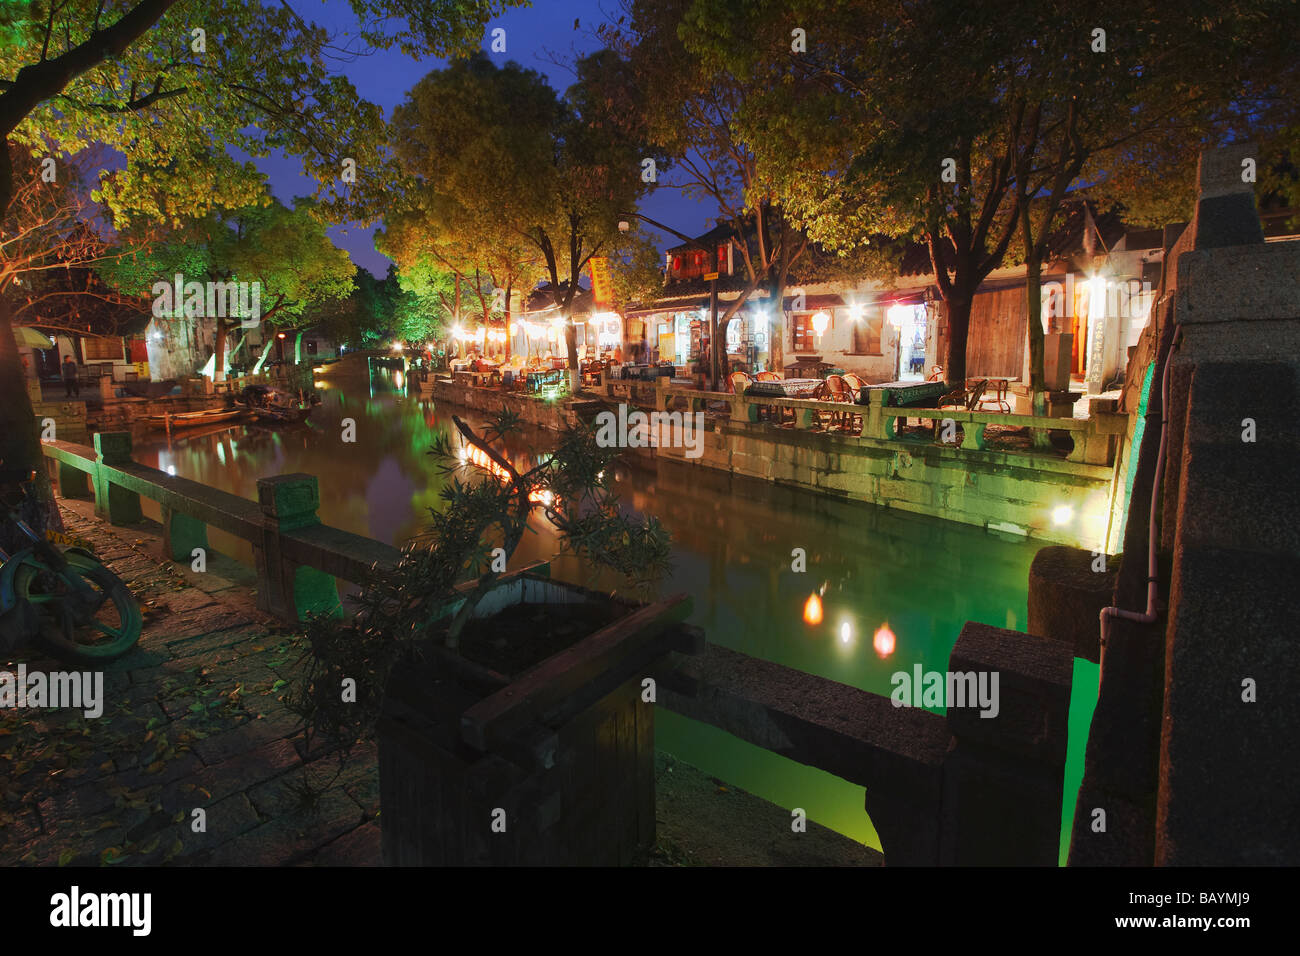 Restaurants And Teahouses Along Canal, Tongli, Jiangsu, China Stock Photo